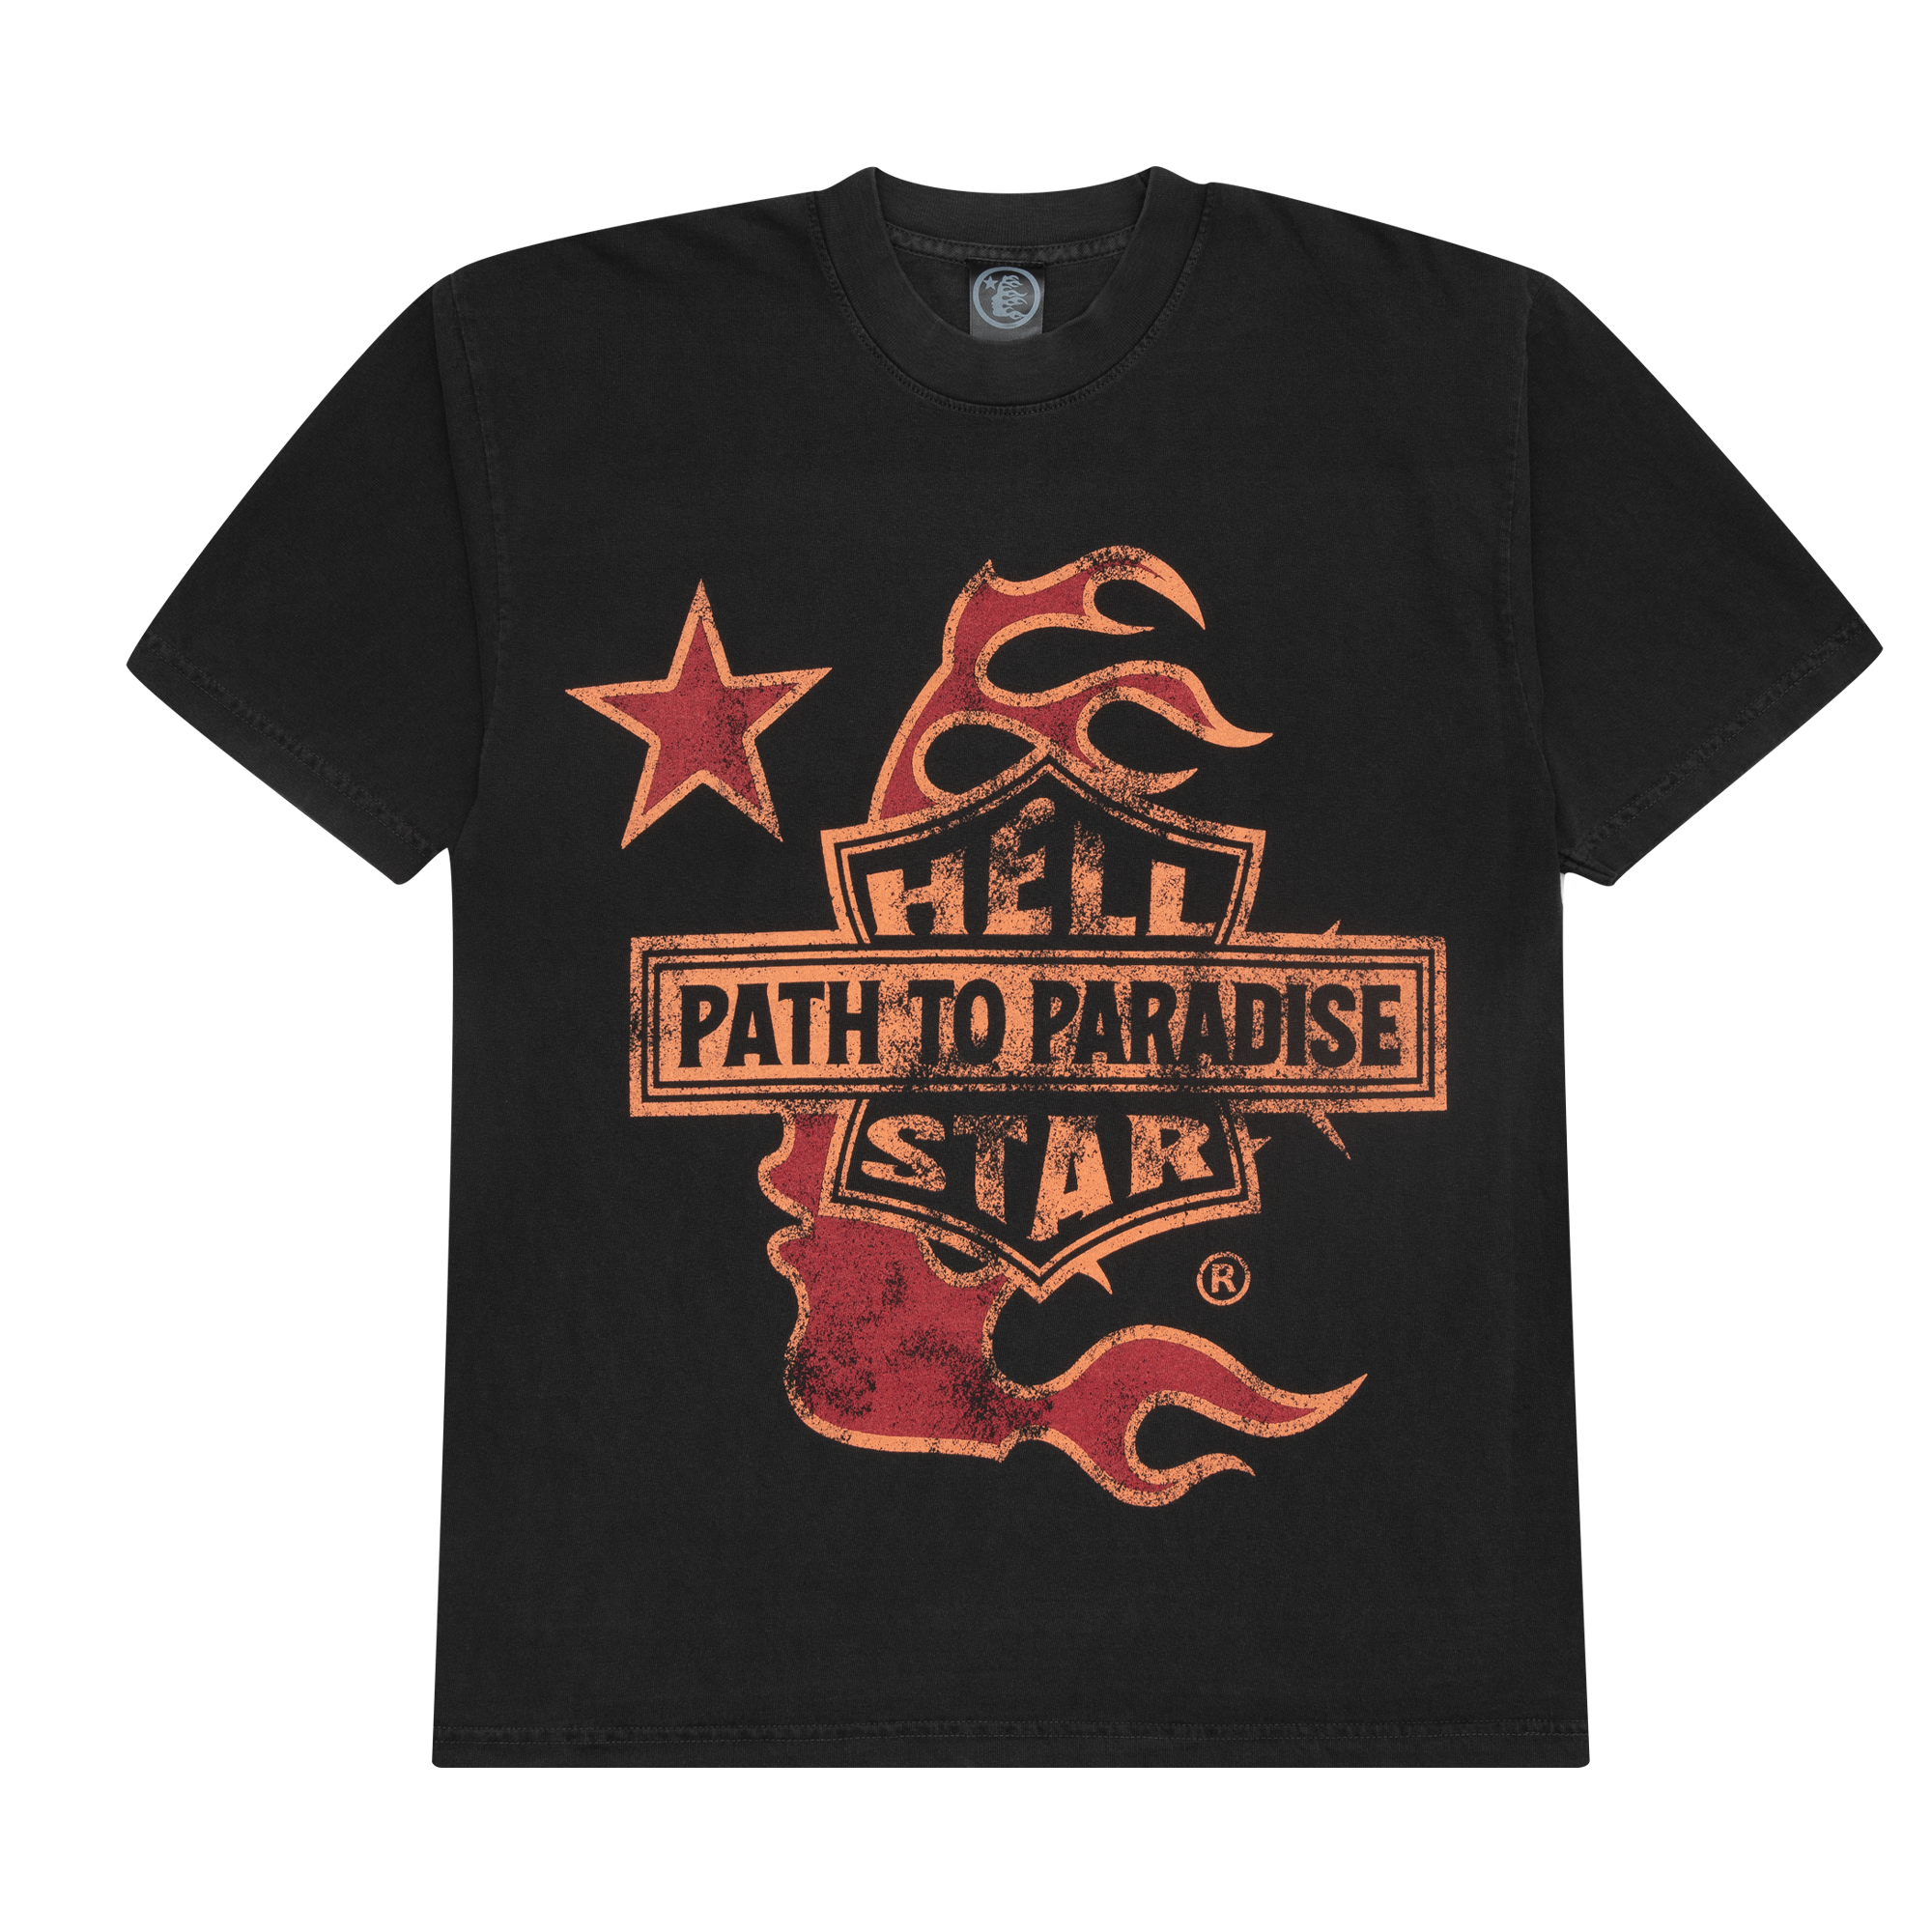 hell star shirts sizing｜TikTok Search